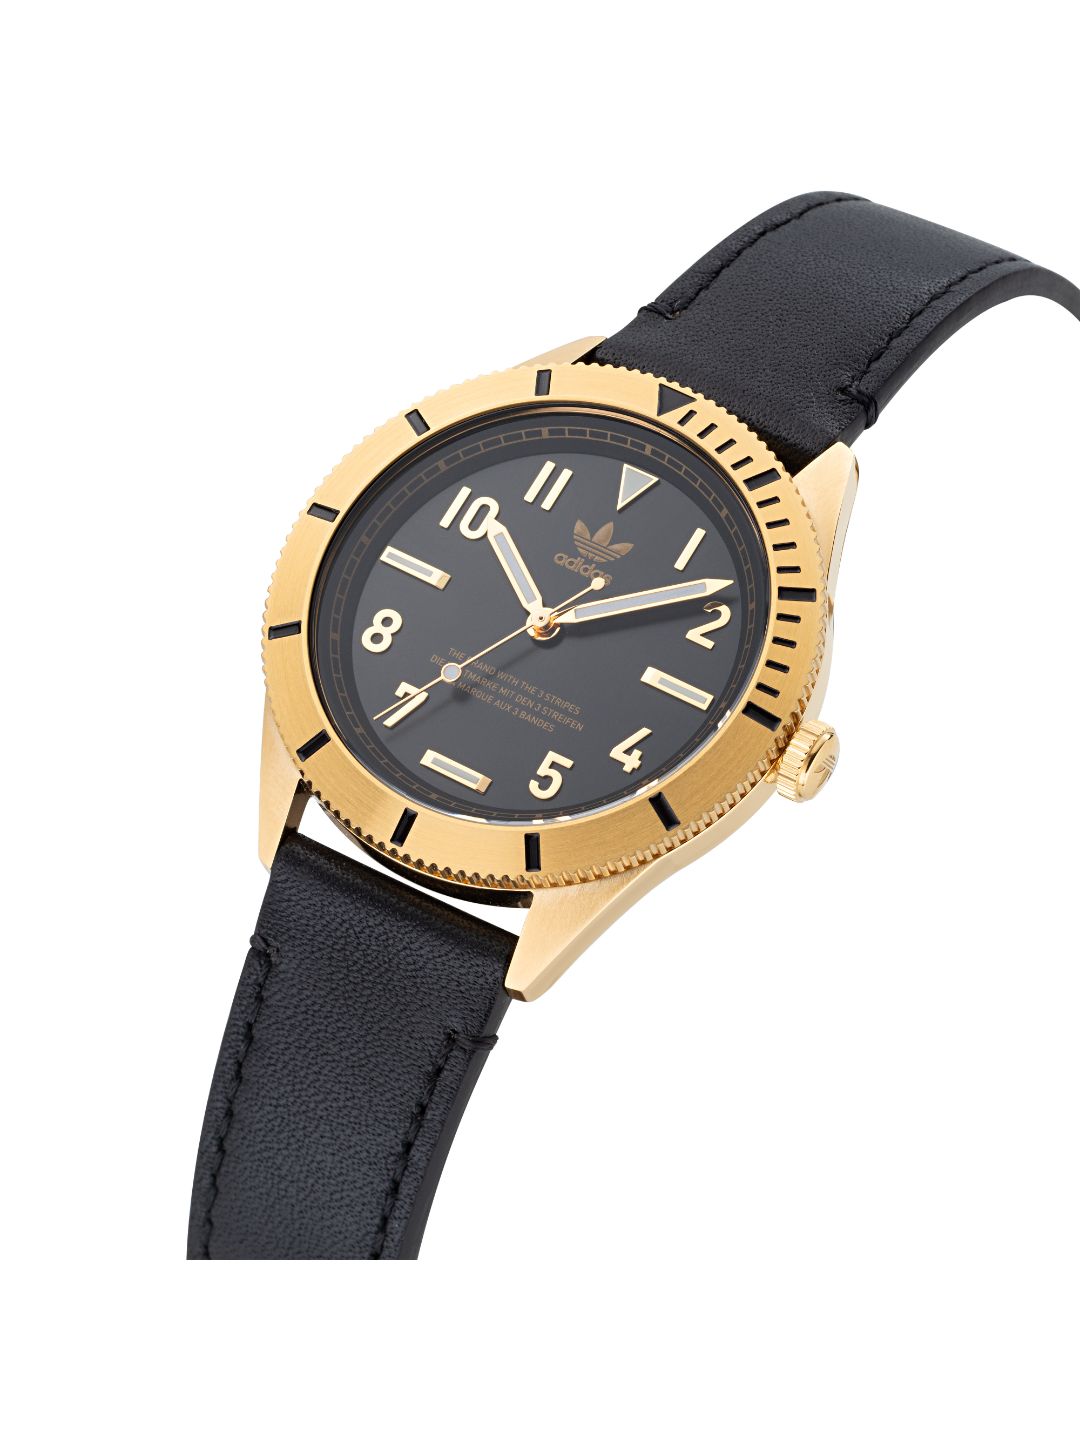 Adidas Originals Gold Dial Unisex Watch - AOFH22504